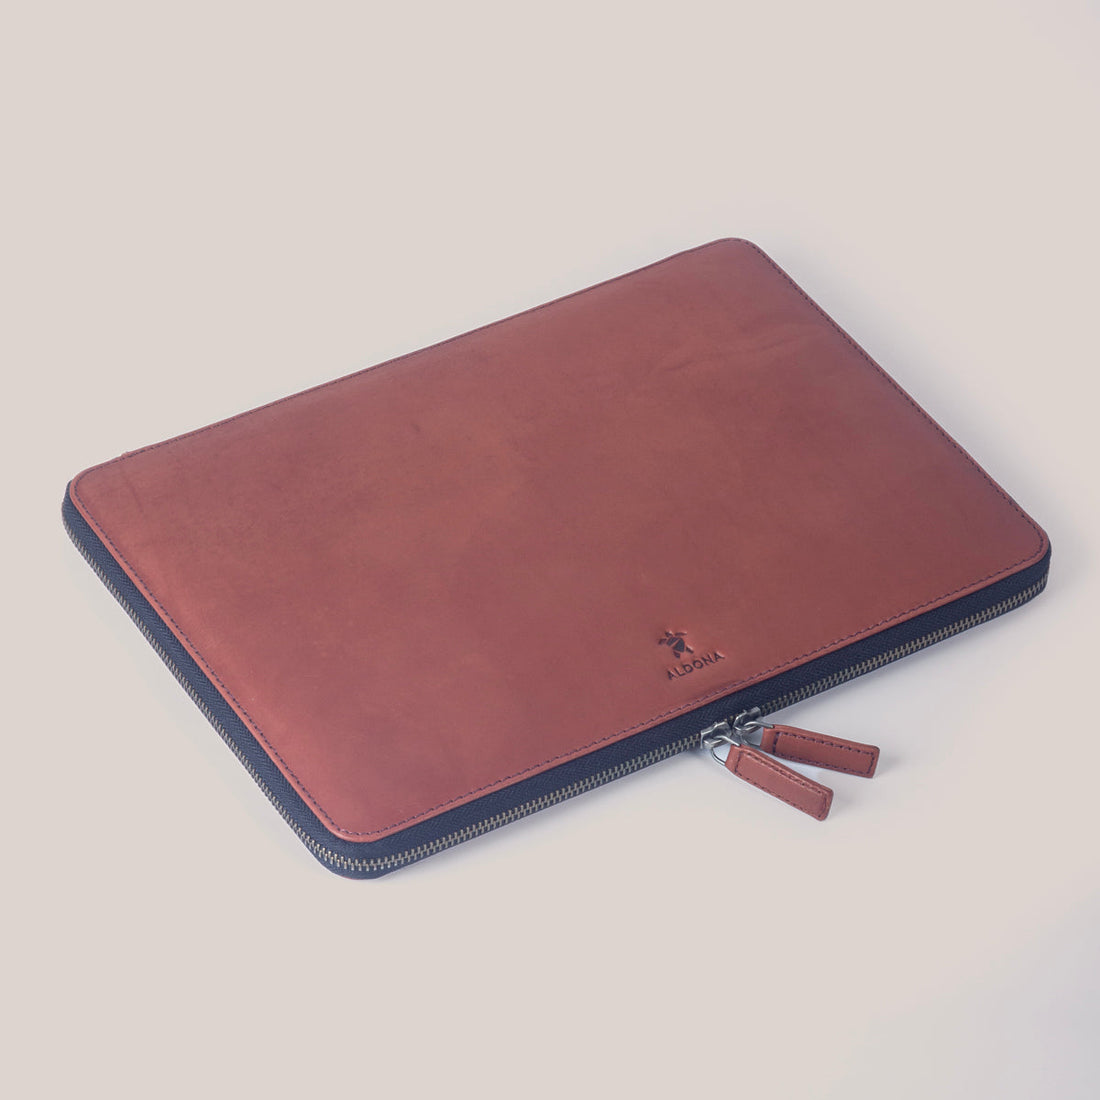 Microsoft Surface Laptop Studio Zippered Laptop Case - Felt and Tan Crunch